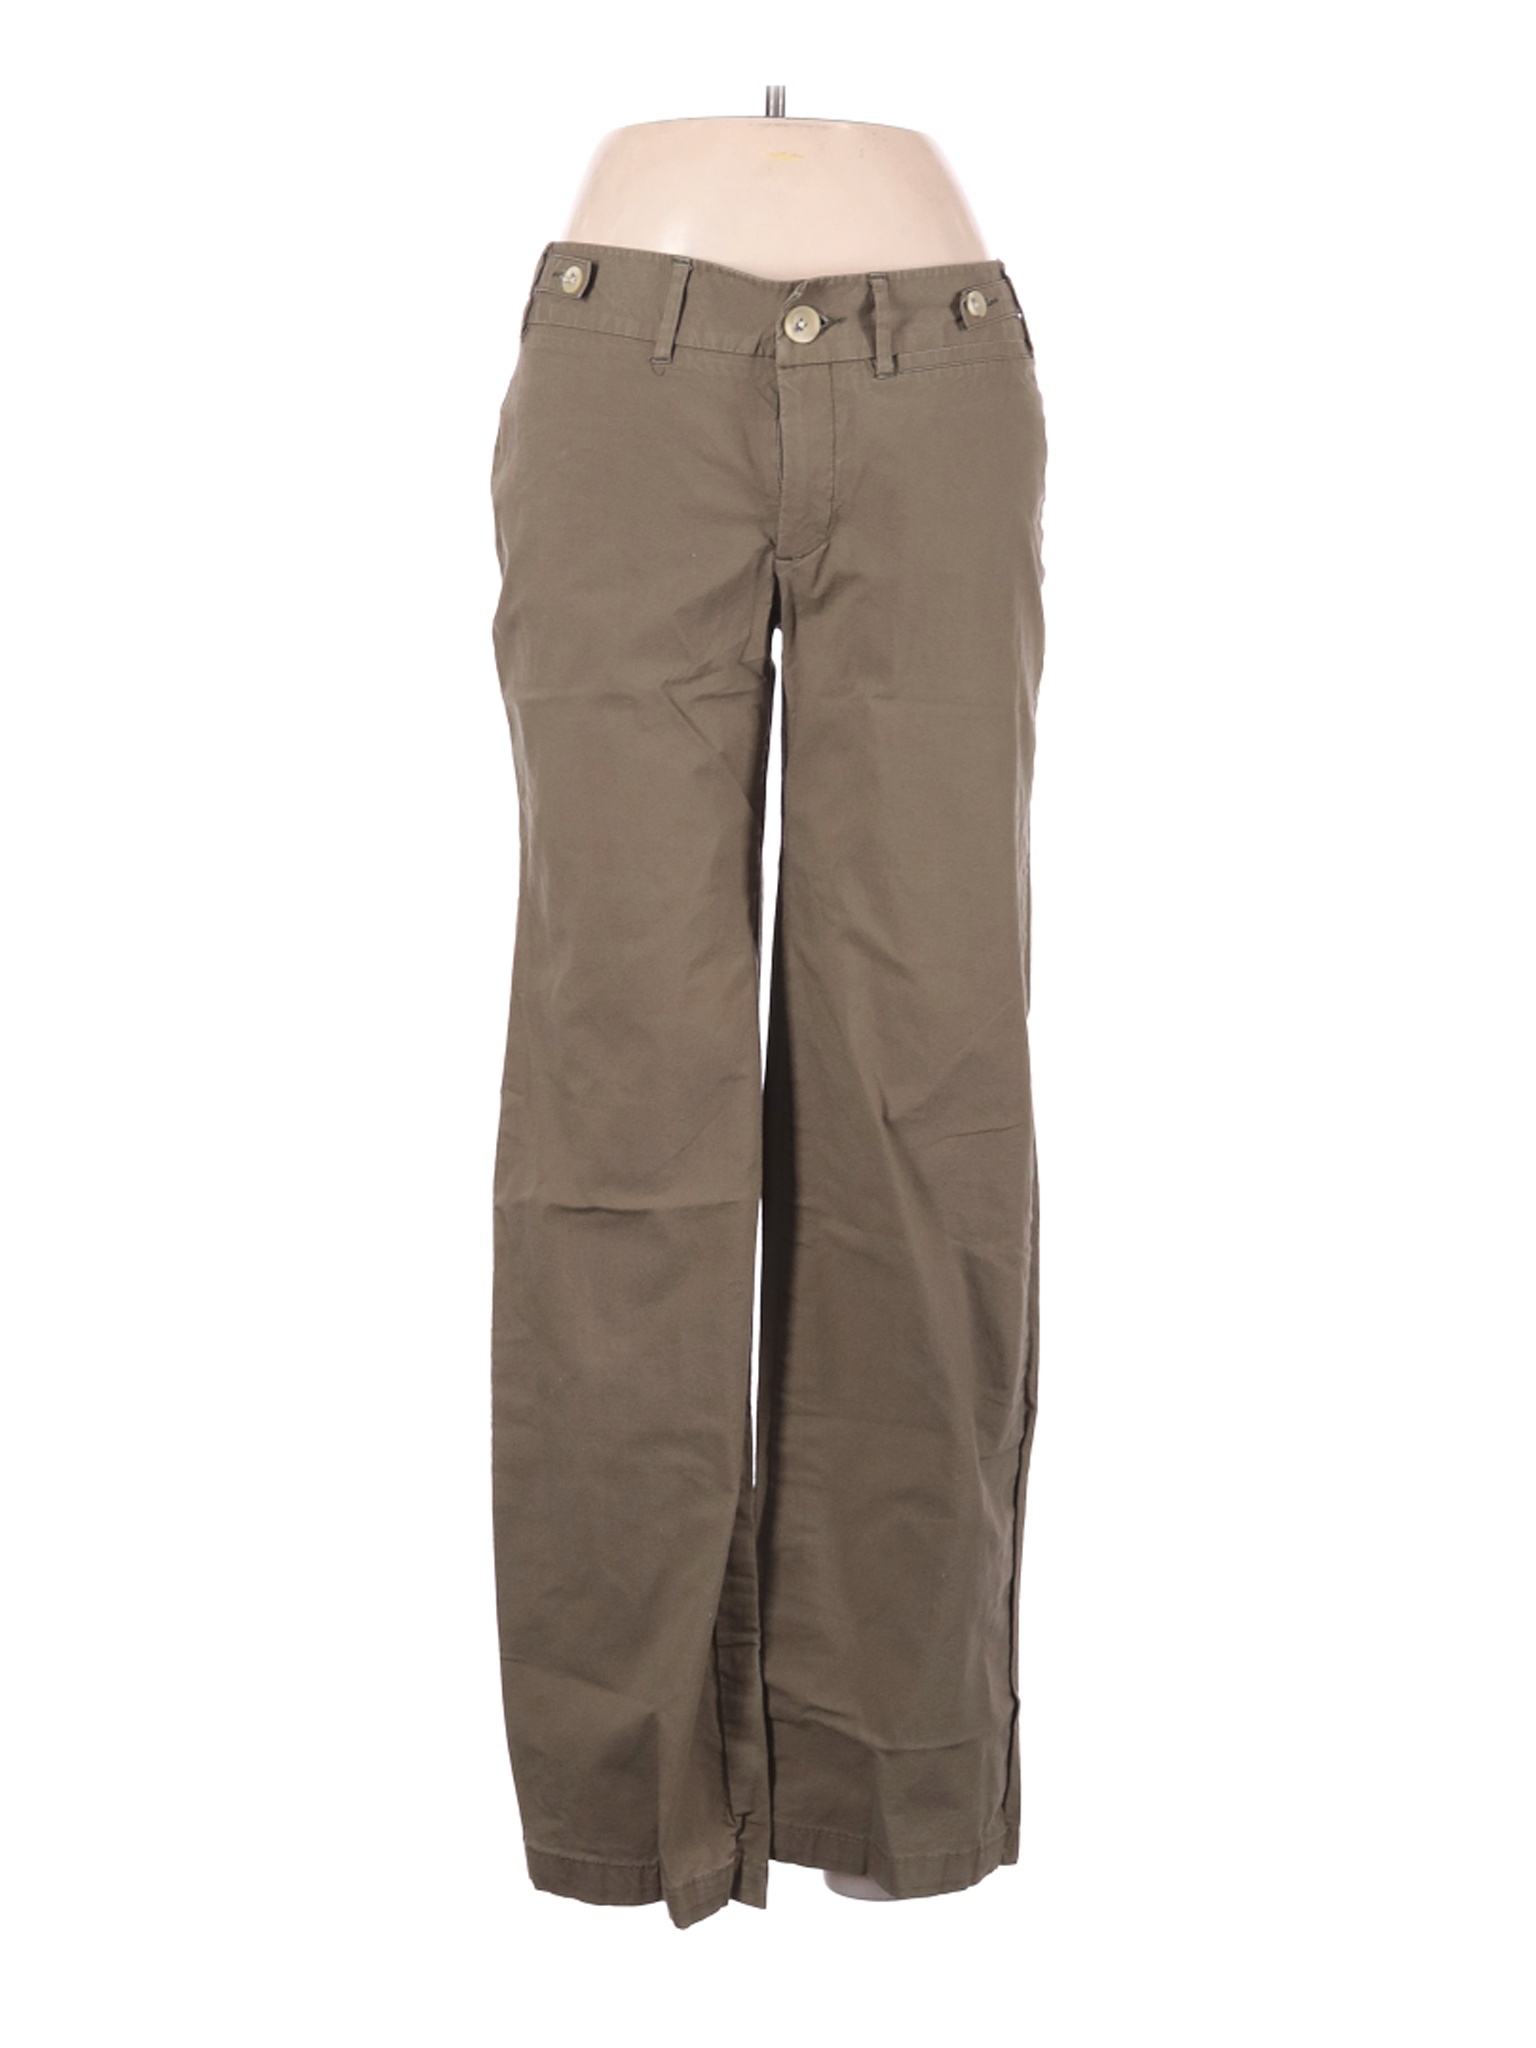 Banana Republic Women Brown Casual Pants 6 | eBay